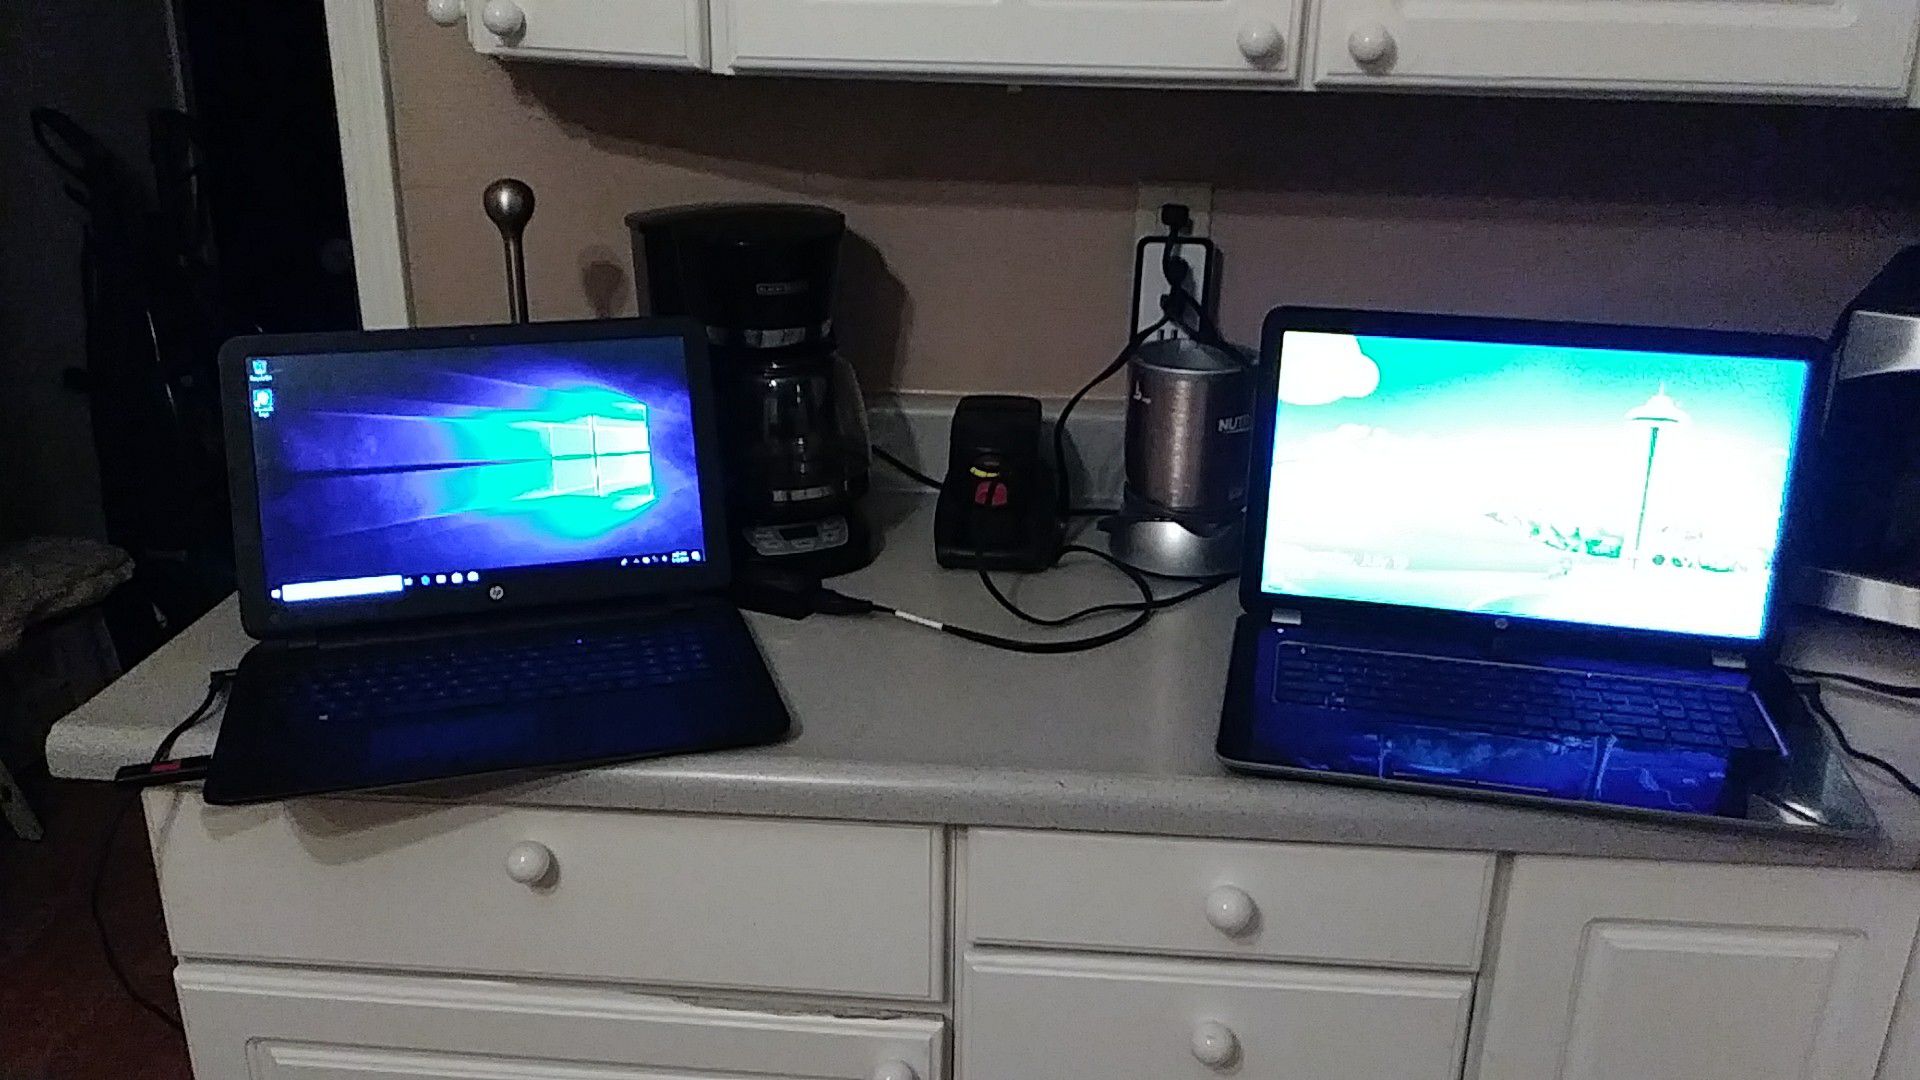 2 HP Laptops